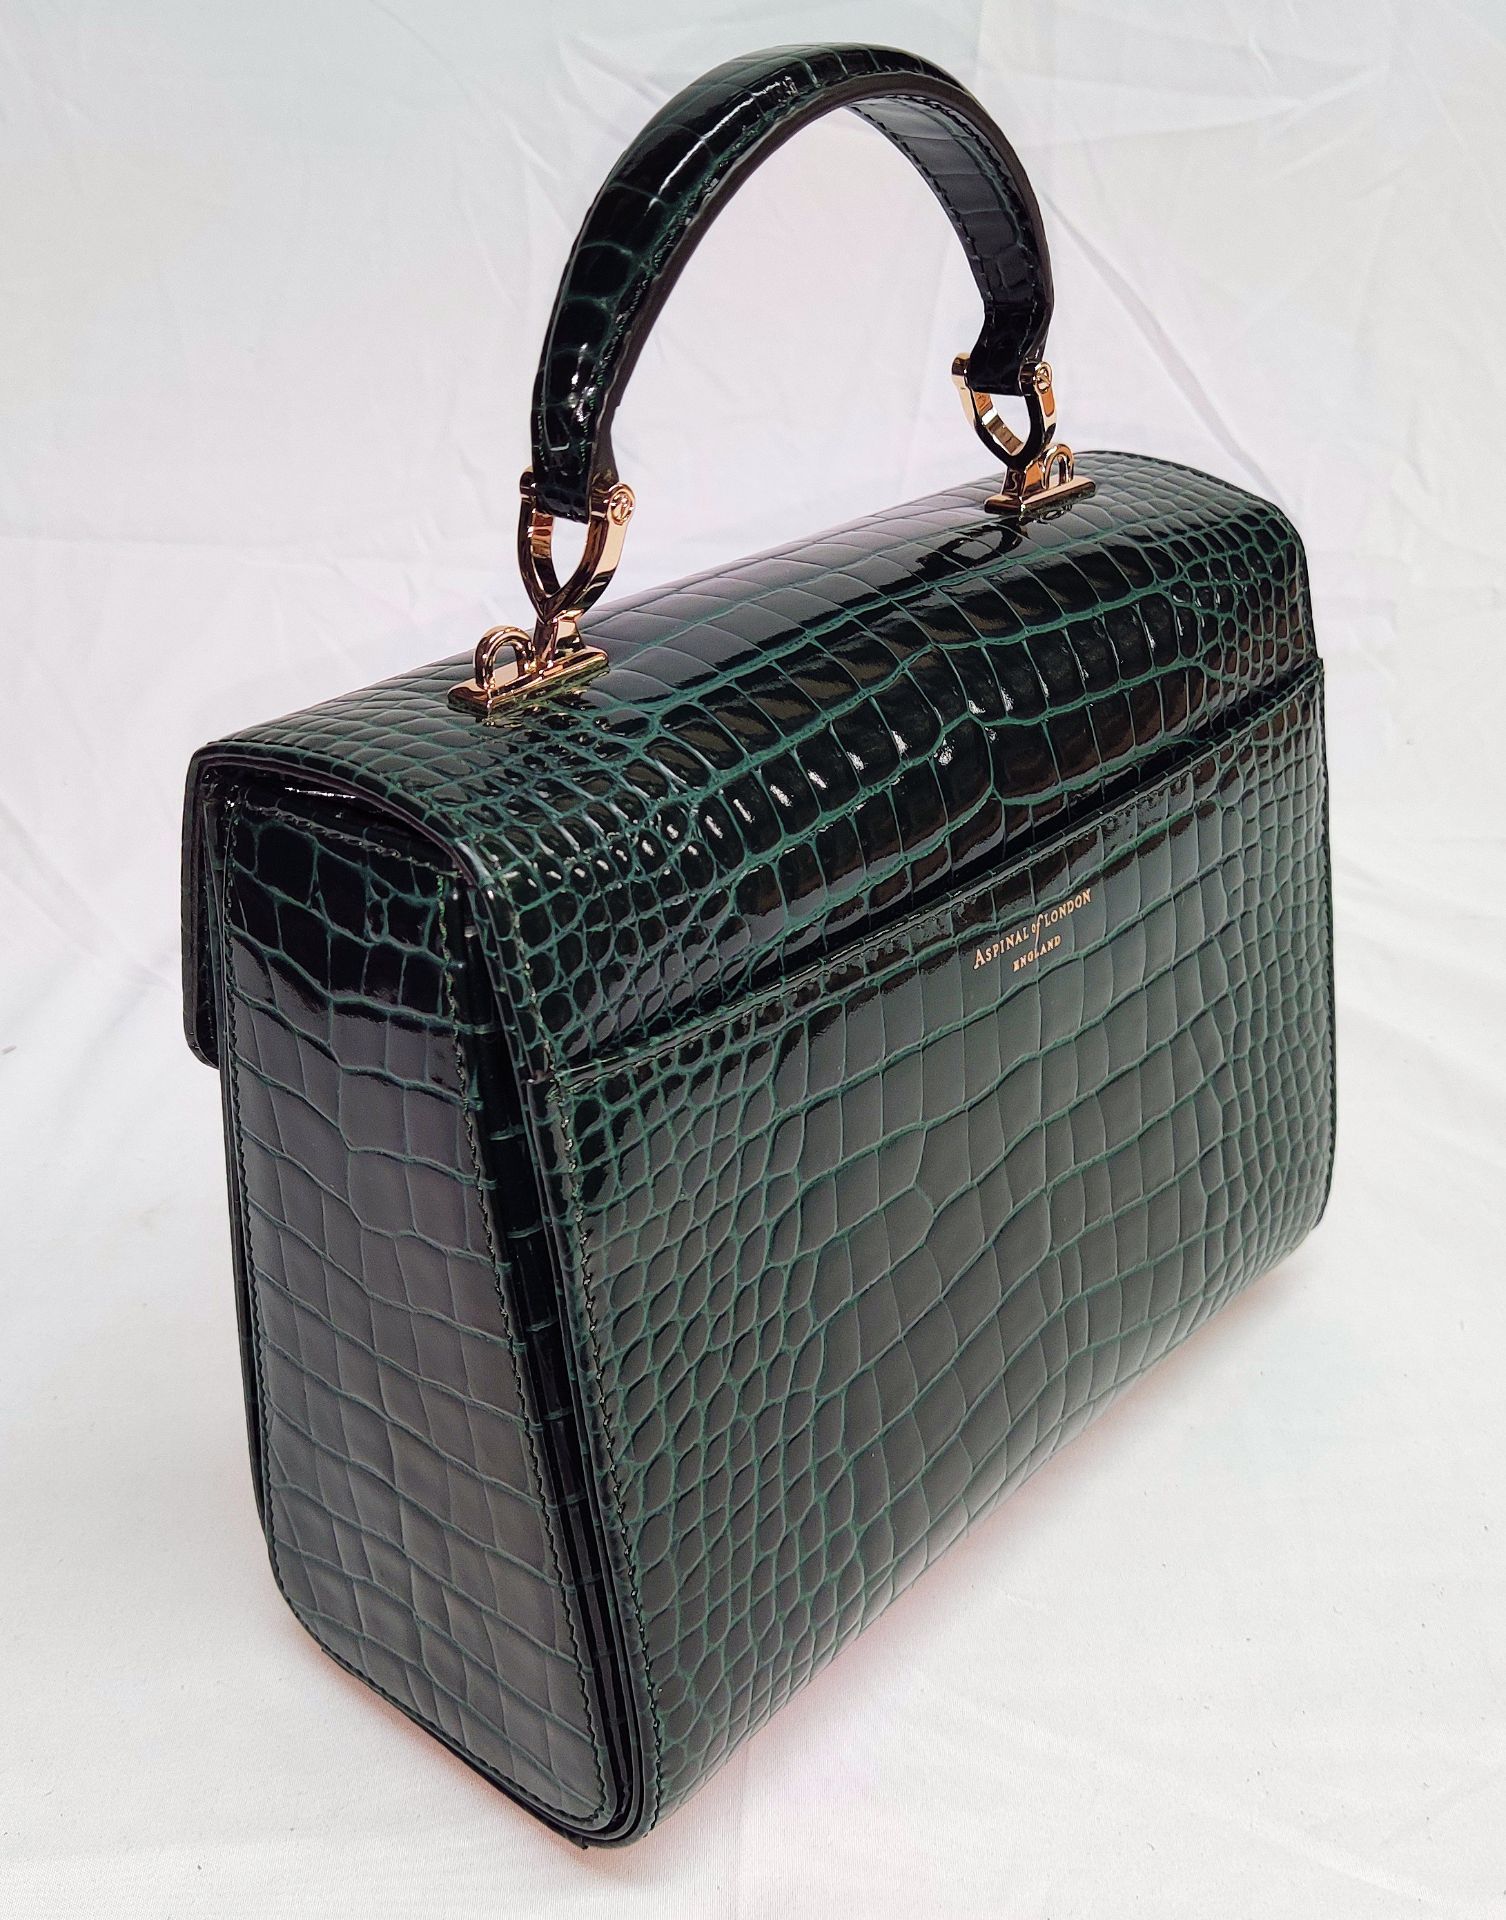 1 x ASPINAL OF LONDON Mayfair Bag - Evergreen Patent Croc - Original RRP £695.00 - Image 6 of 23